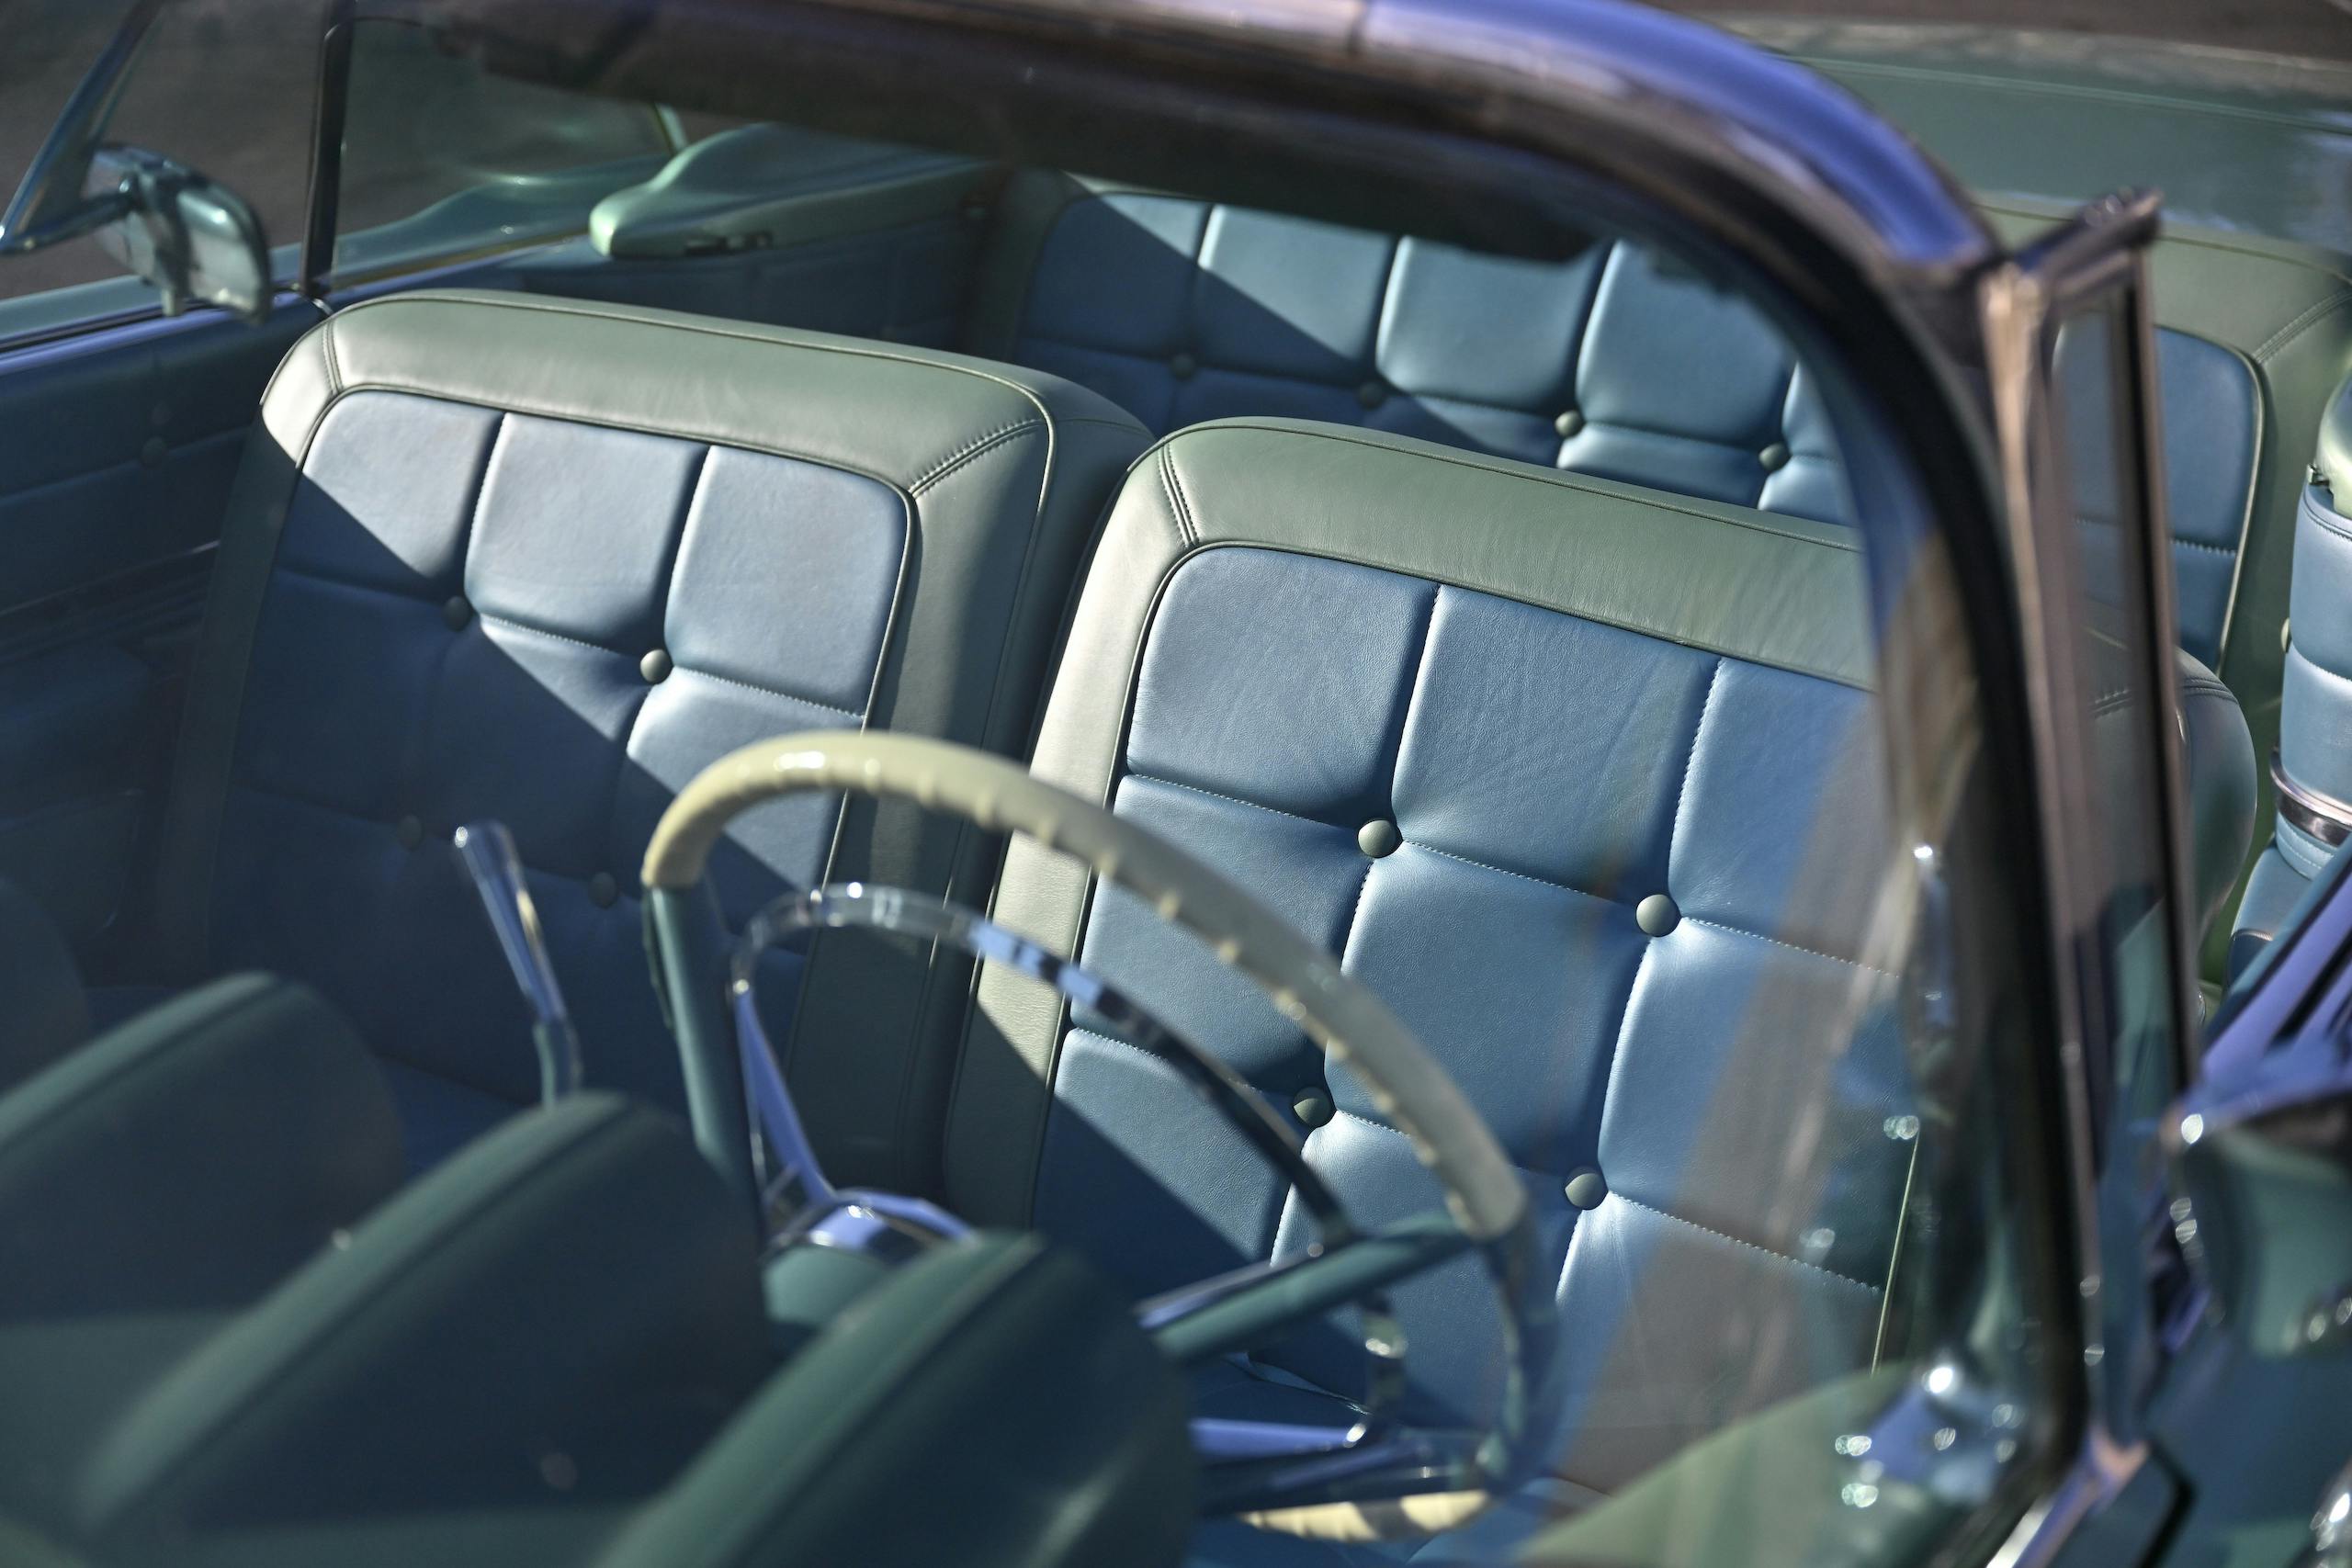 Continental classic convertible interior